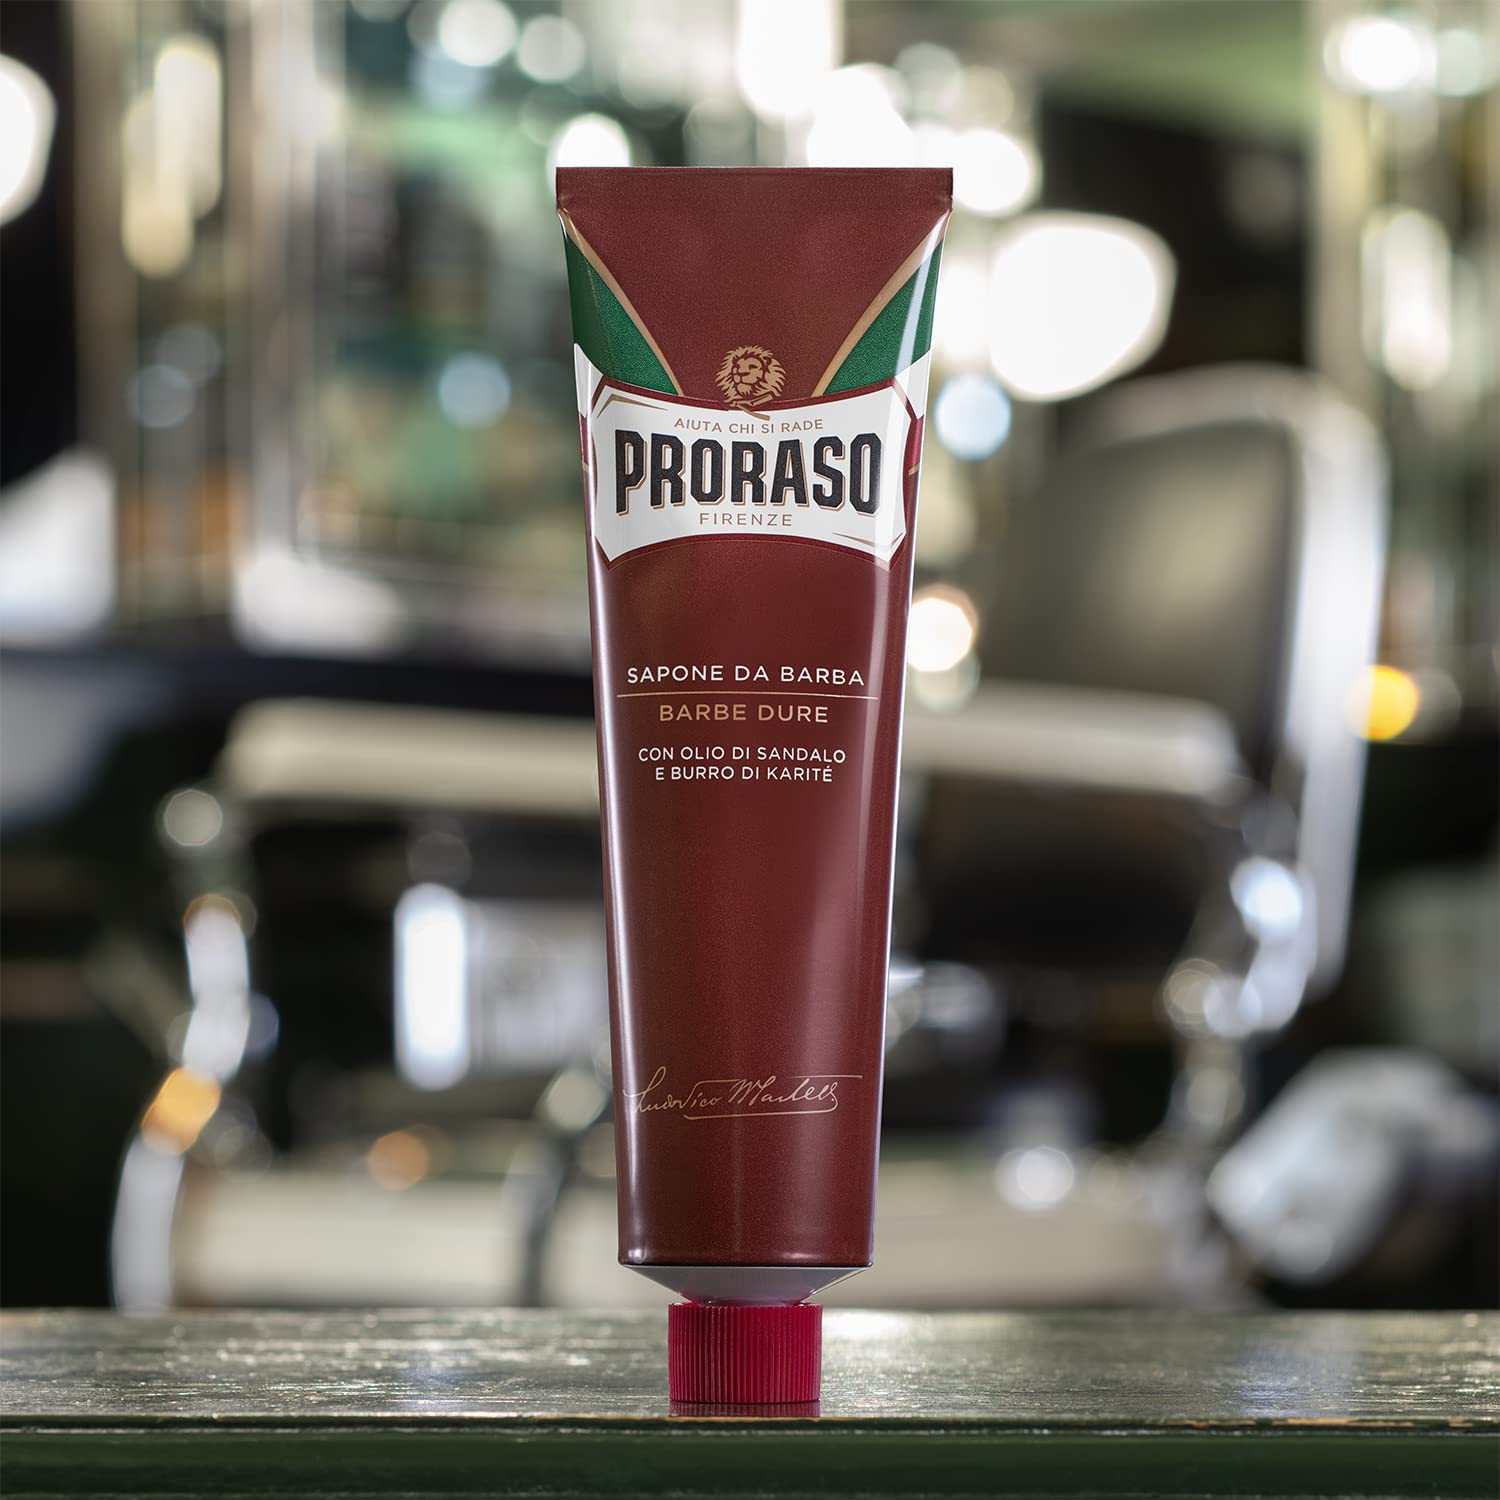 Proraso Nourishing Shaving Cream for Men